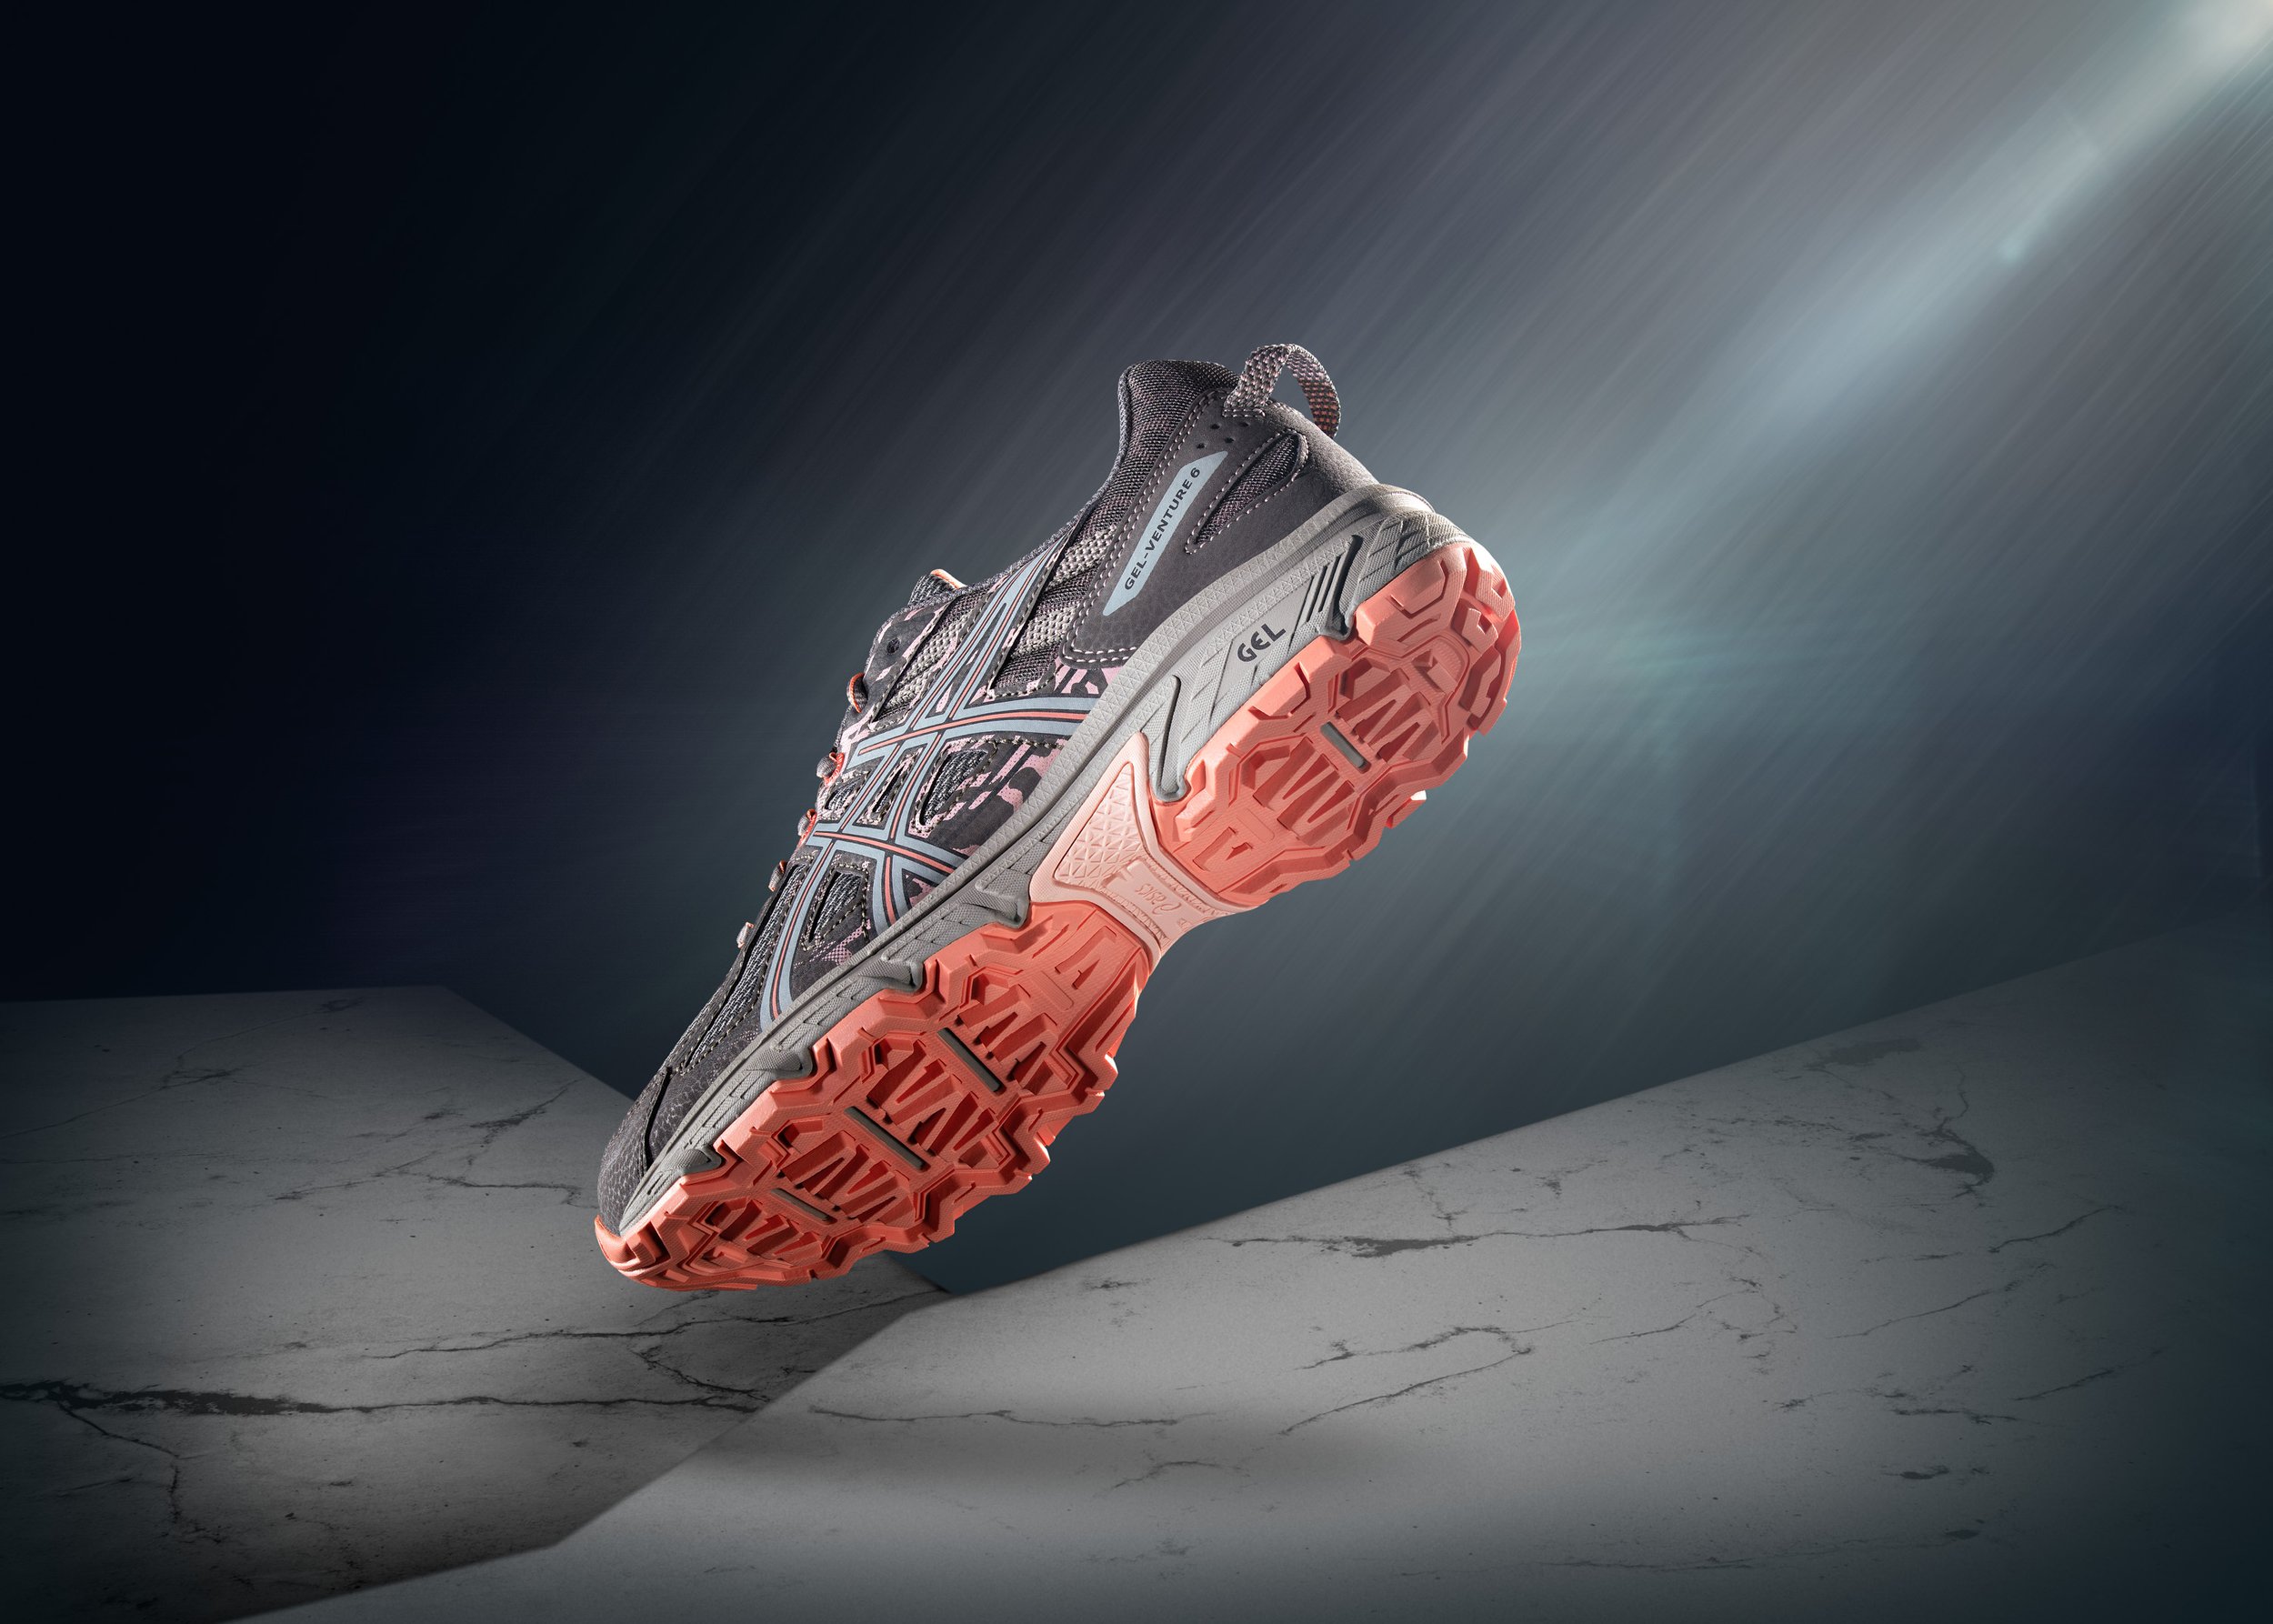 Asics Gel Ladies Running Shoe | Commercial Product Shot